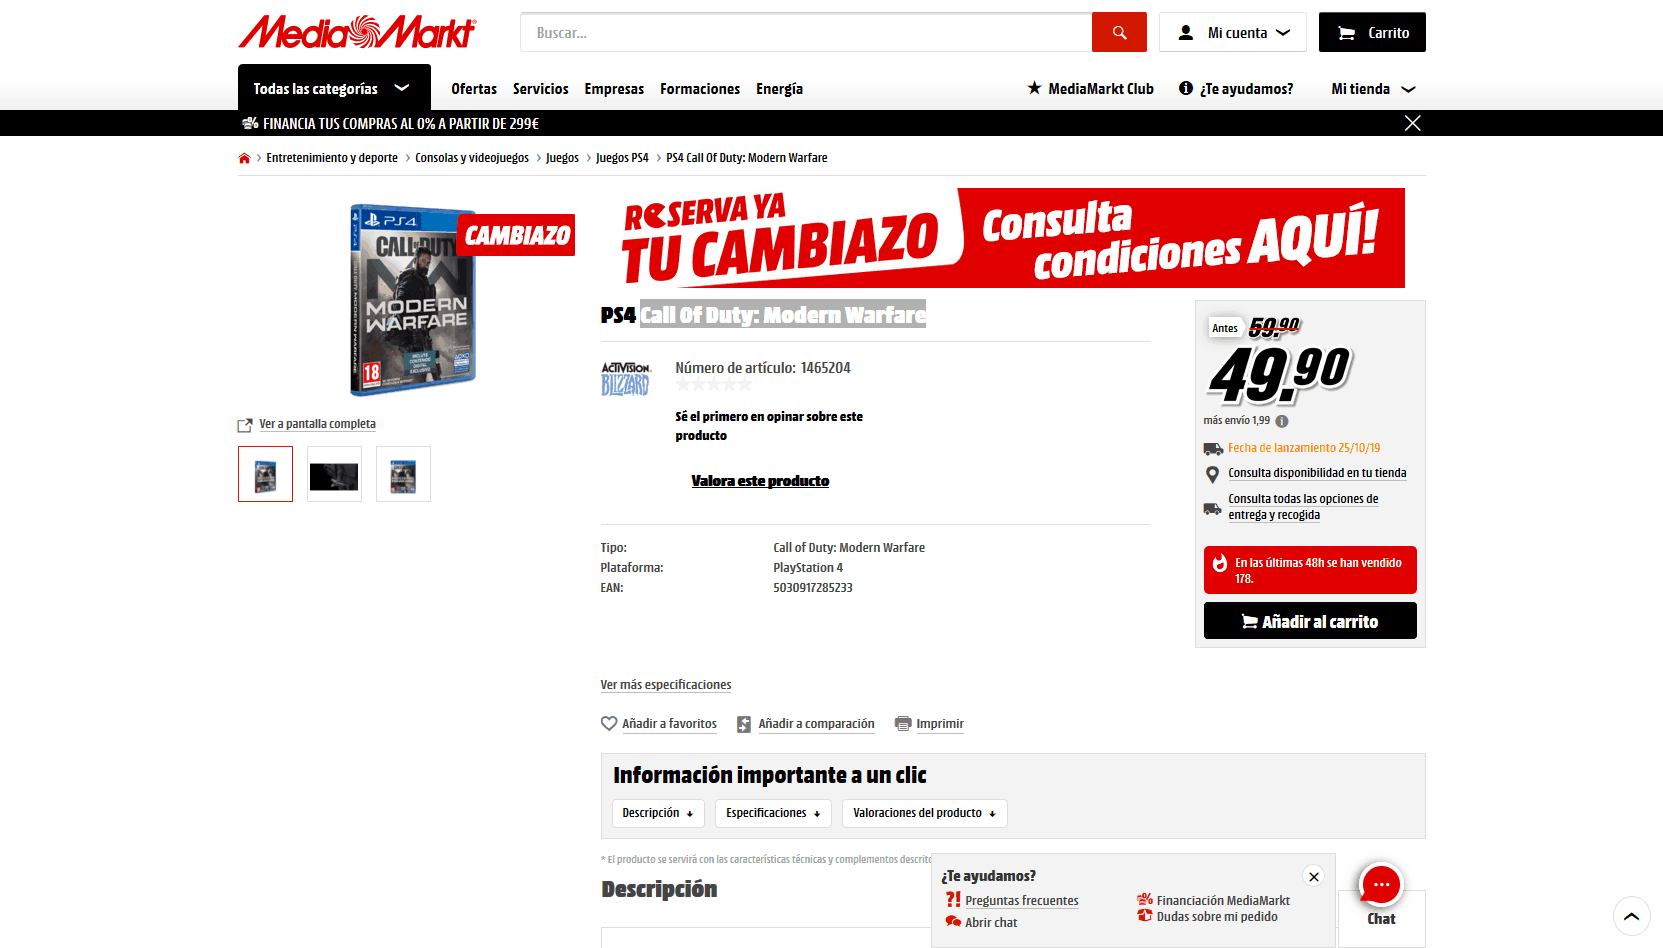 Cambiazo Media Markt para Call Of Duty: Modern Warfare por 49.90€